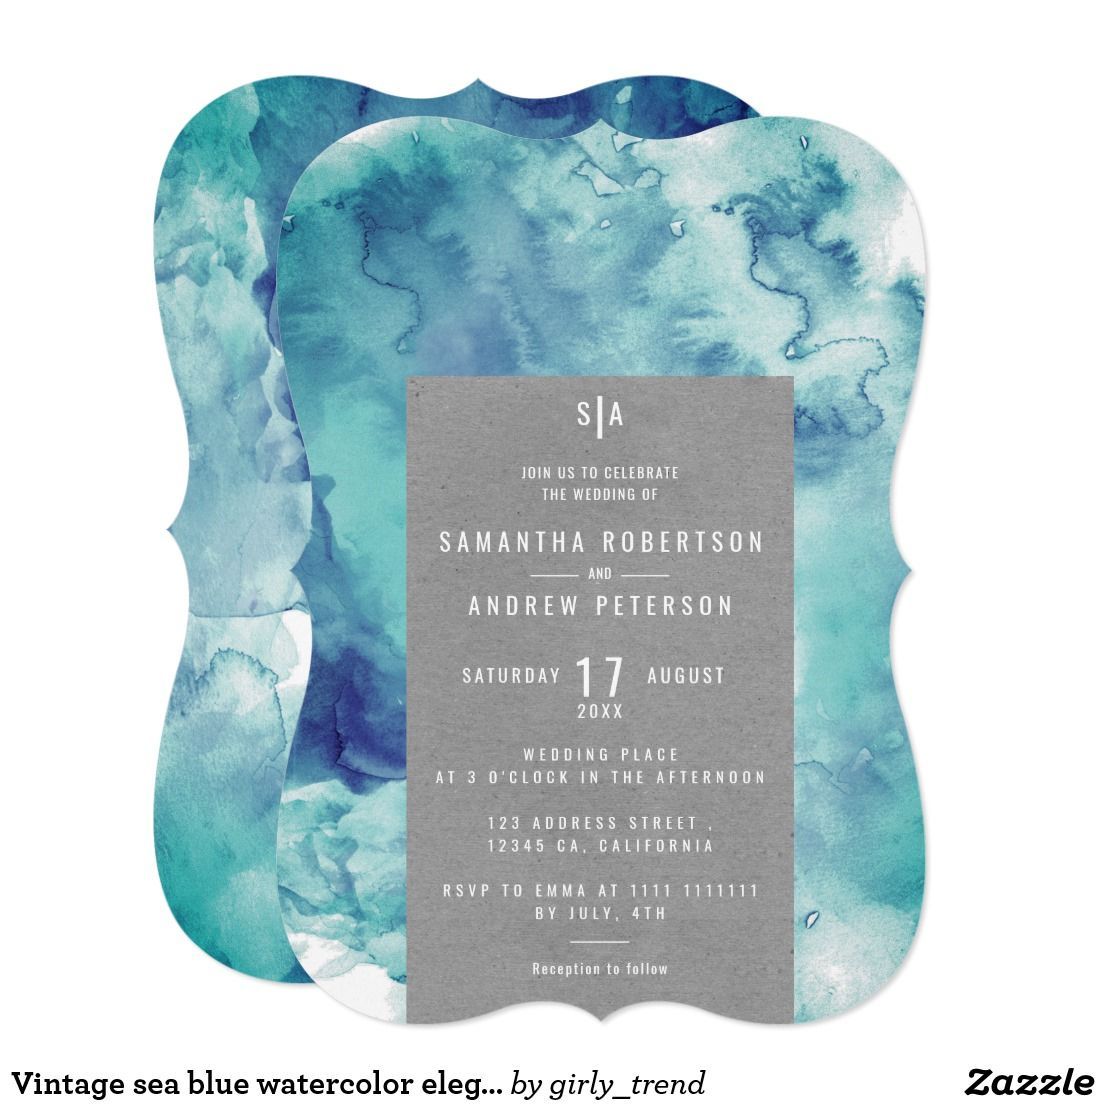 Vintage sea blue watercolor elegant kraft wedding invitation | Zazzle.com -   15 wedding Blue aqua ideas